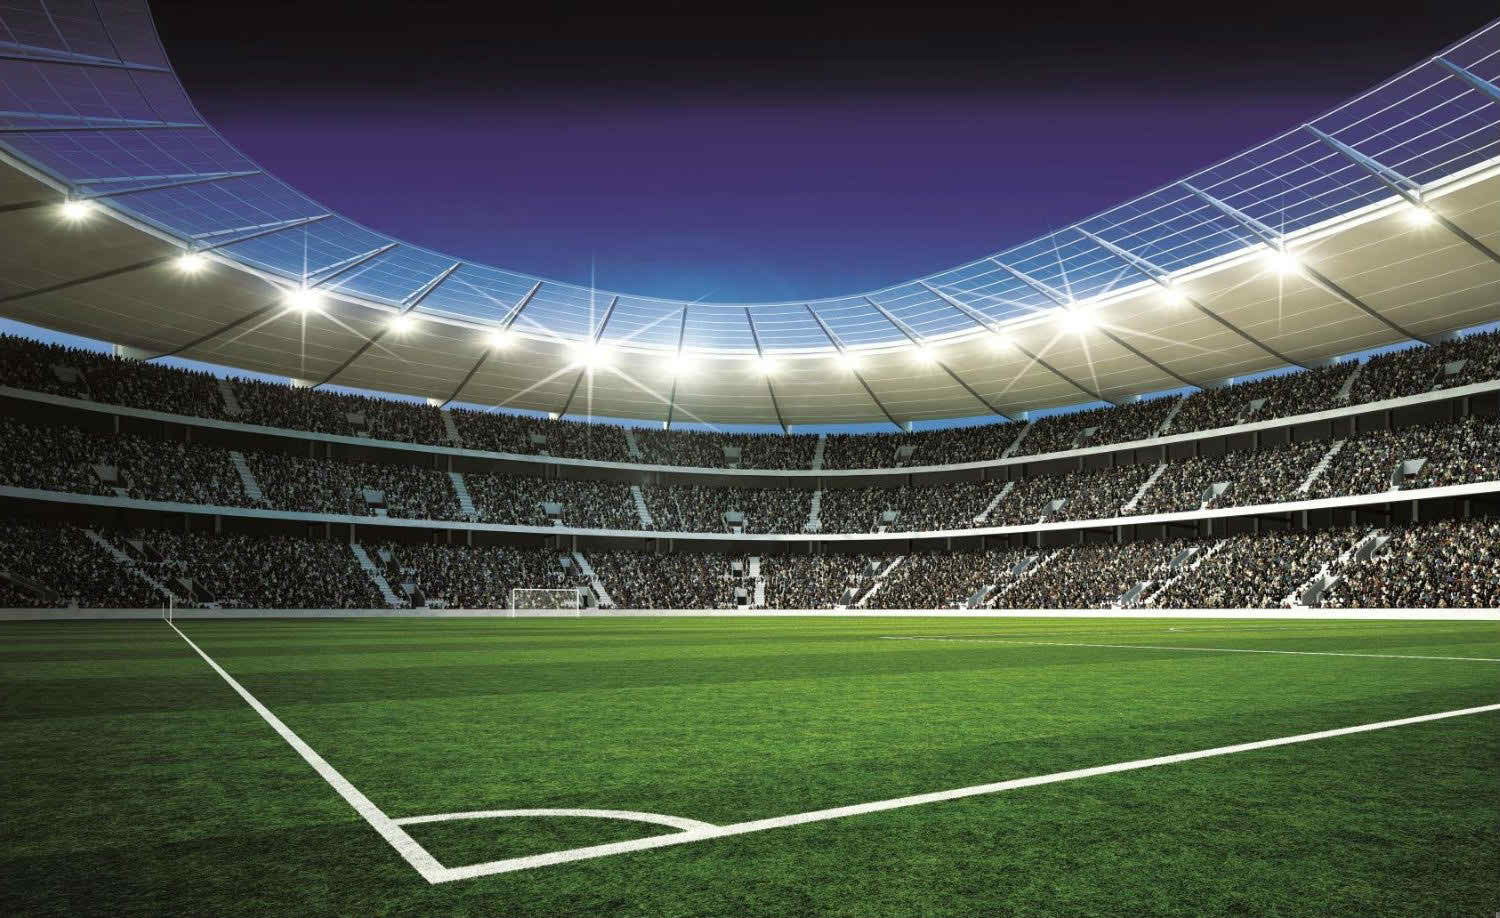 3d Sports Wallpaper - Fundo Futebol Full Hd , HD Wallpaper & Backgrounds